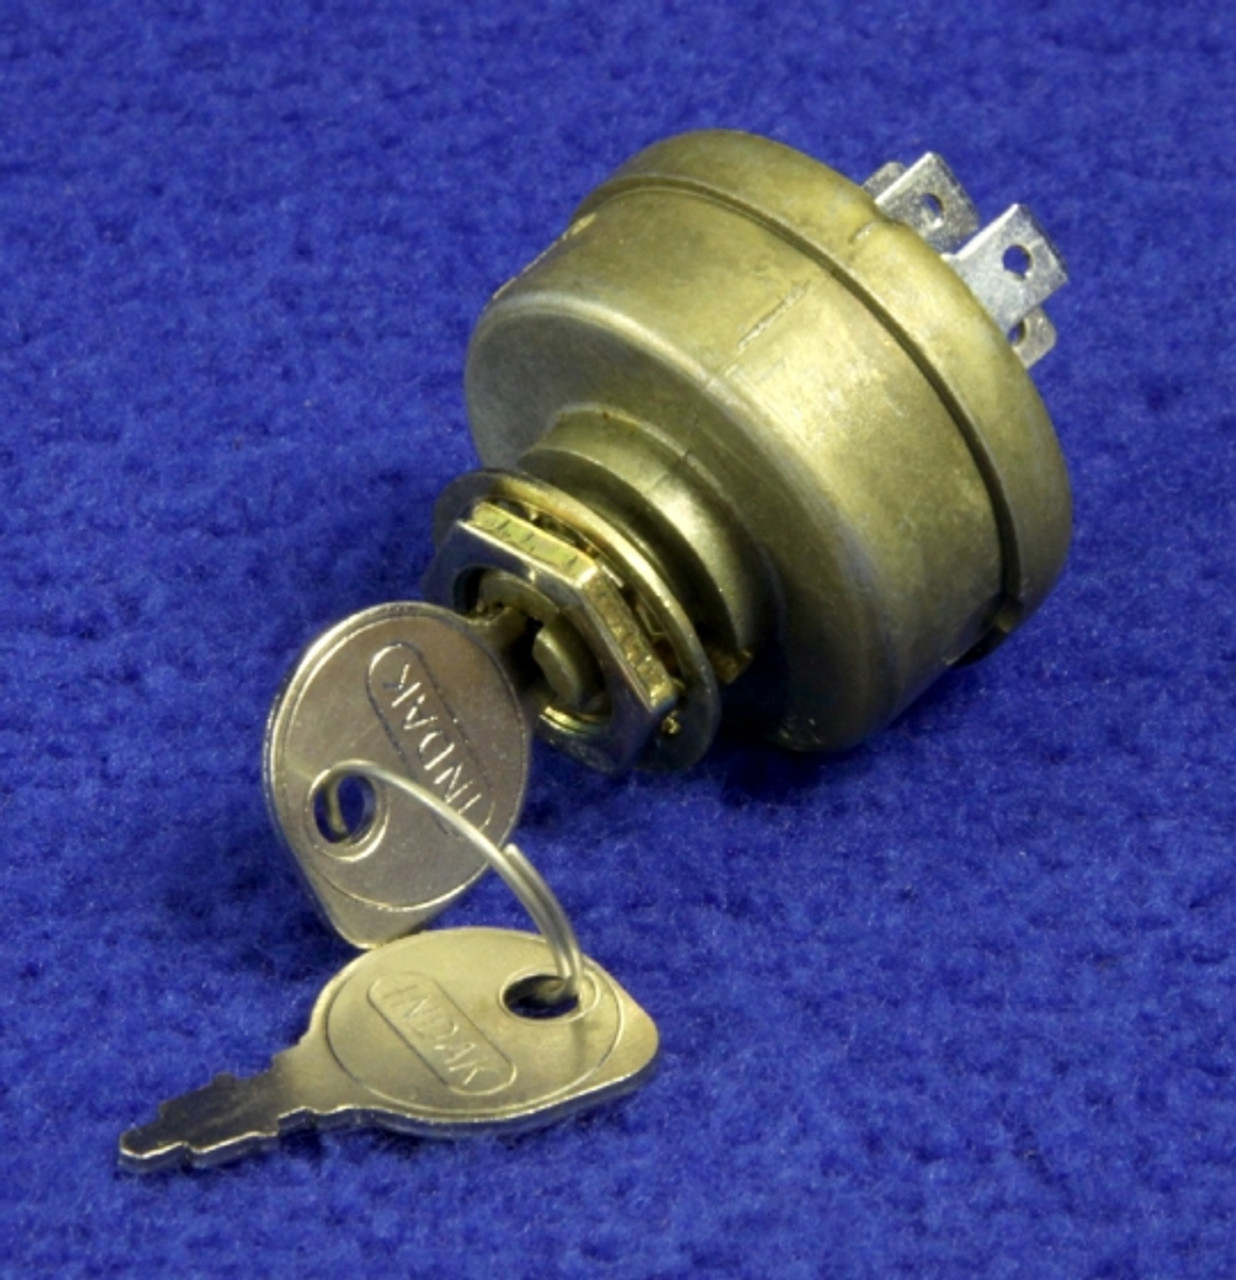 56102526: Kent Aftermarket Key Switch